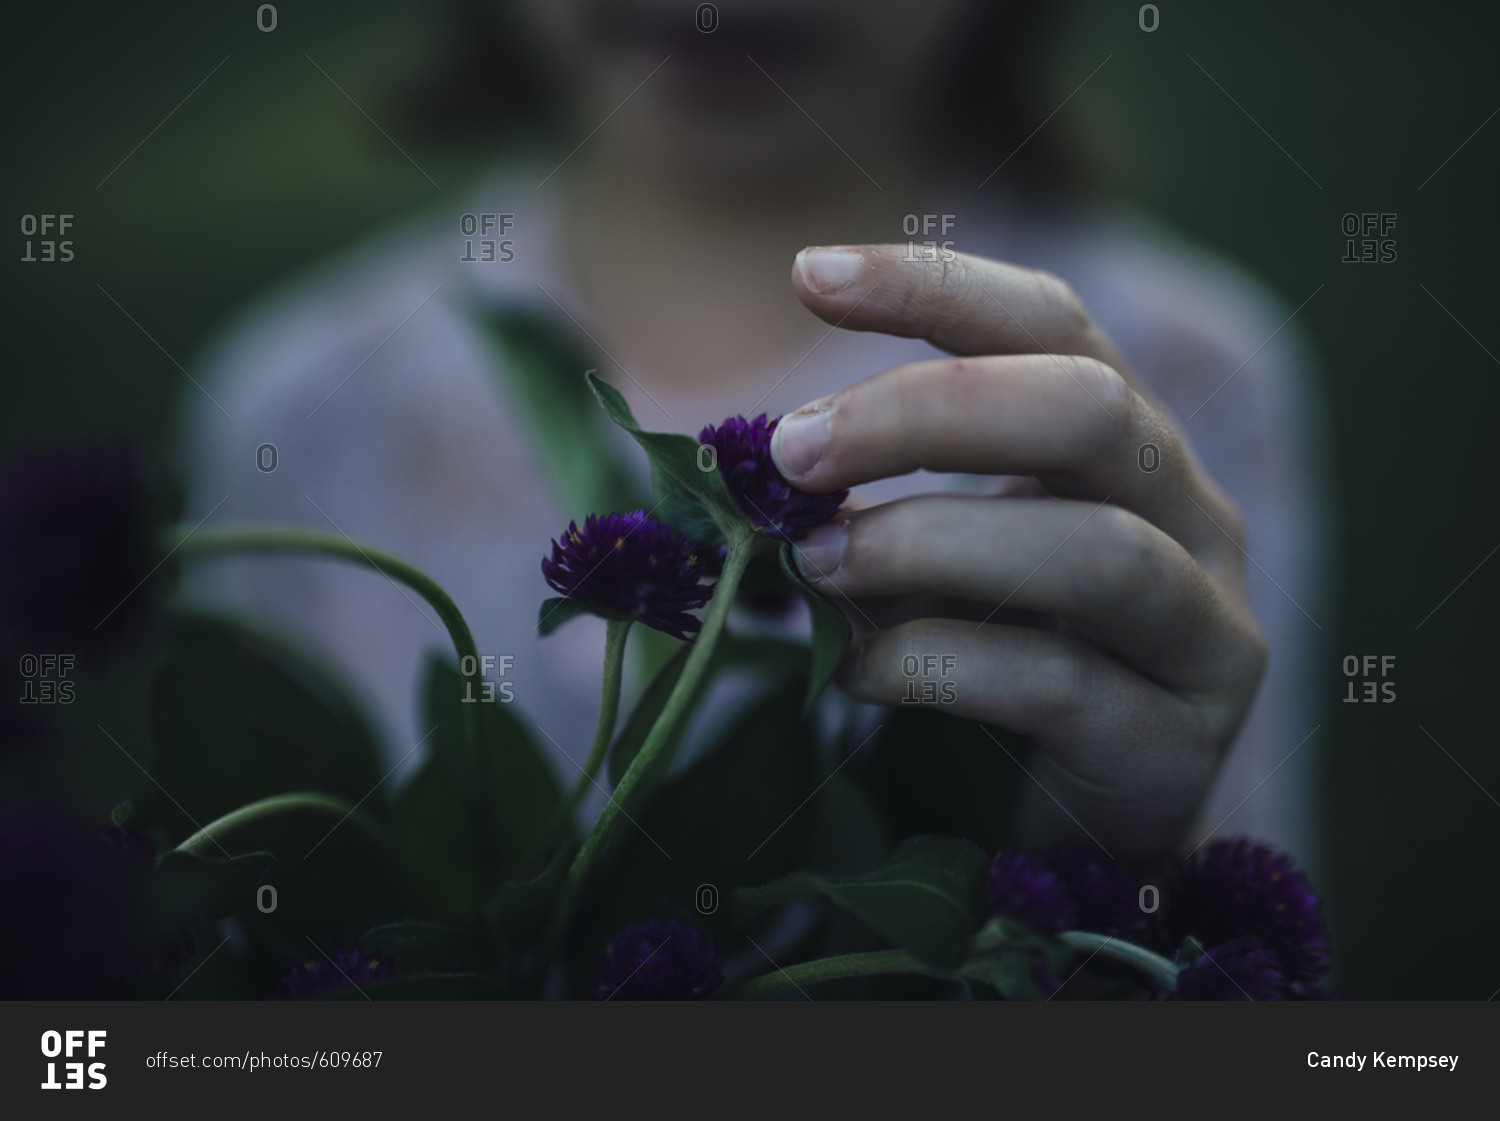 Child touching purple flower blossom